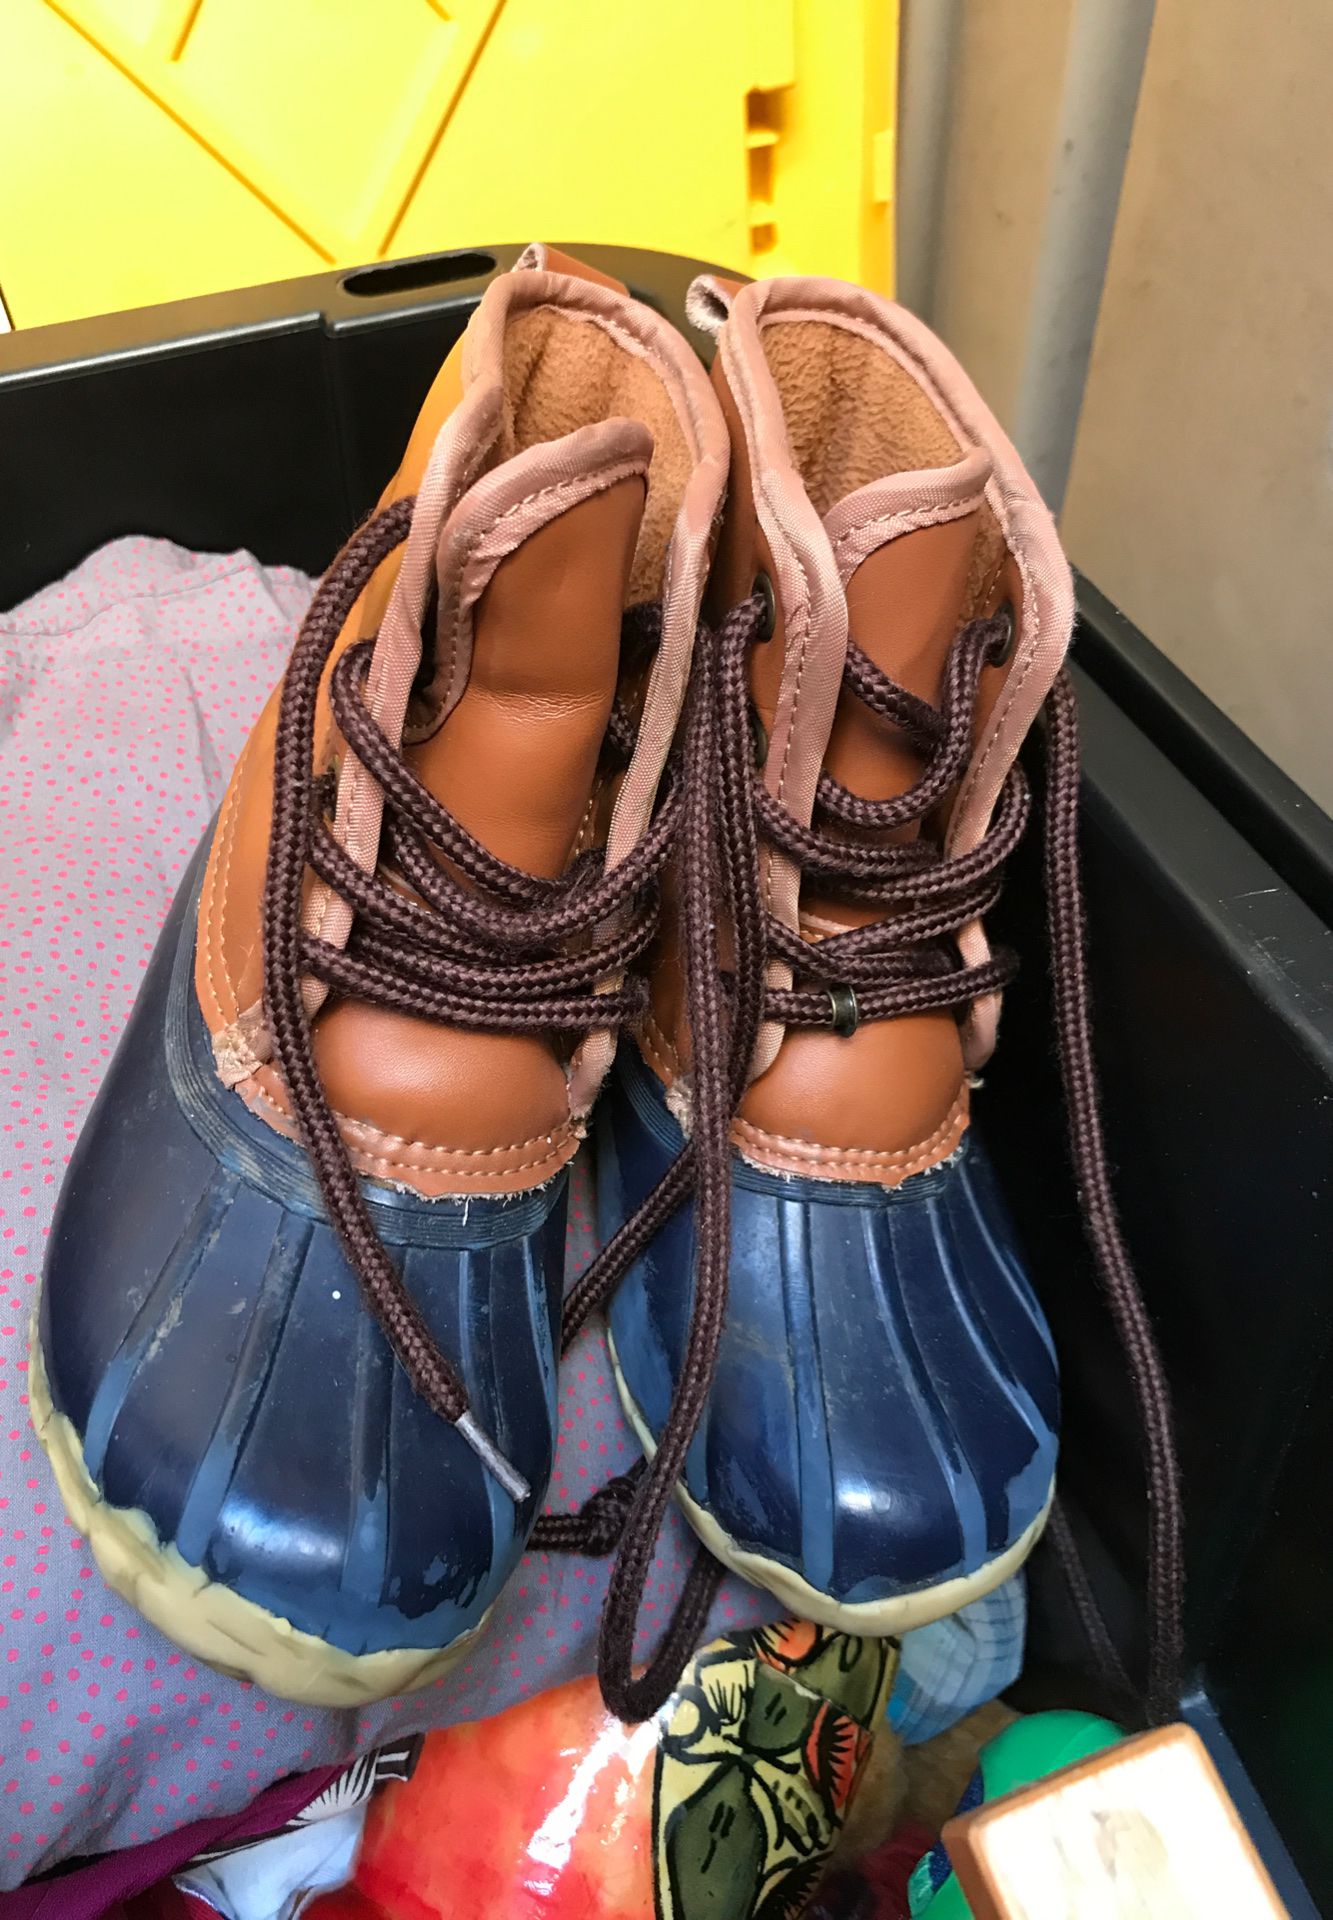 Size 12 boys rain boots